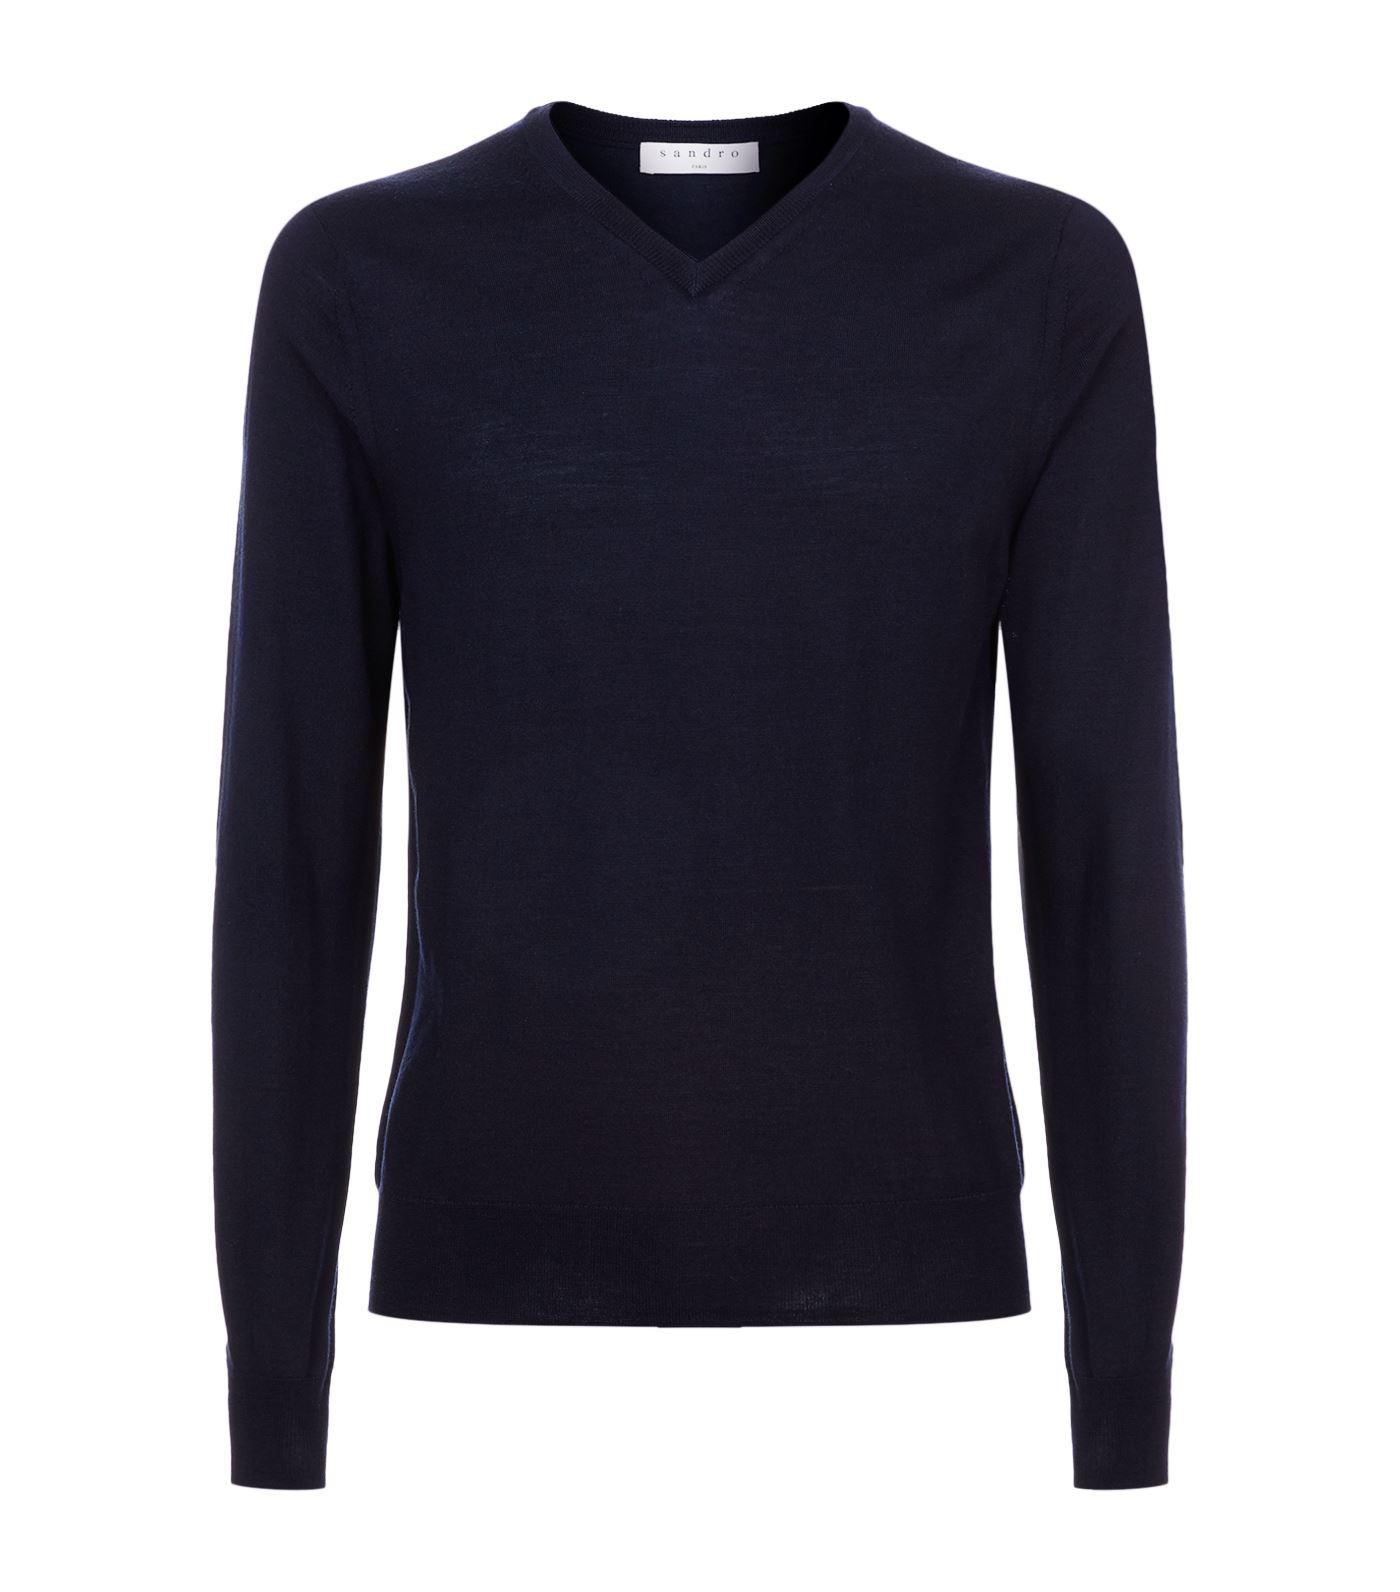 Lyst - Sandro Fine Knit Sweater in Blue for Men